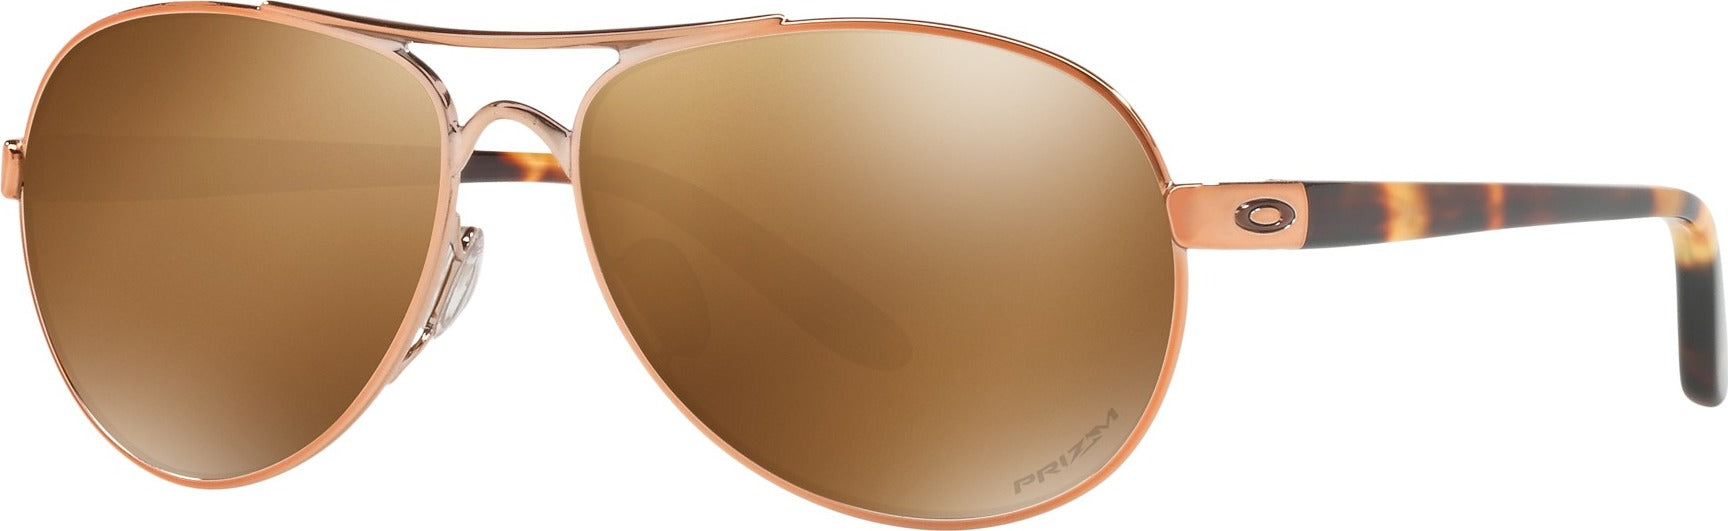 Oakley Tie Breaker Sunglasses - Rose Gold - Prizm Tungsten Iridium  Polarized Lens - Women's | Altitude Sports